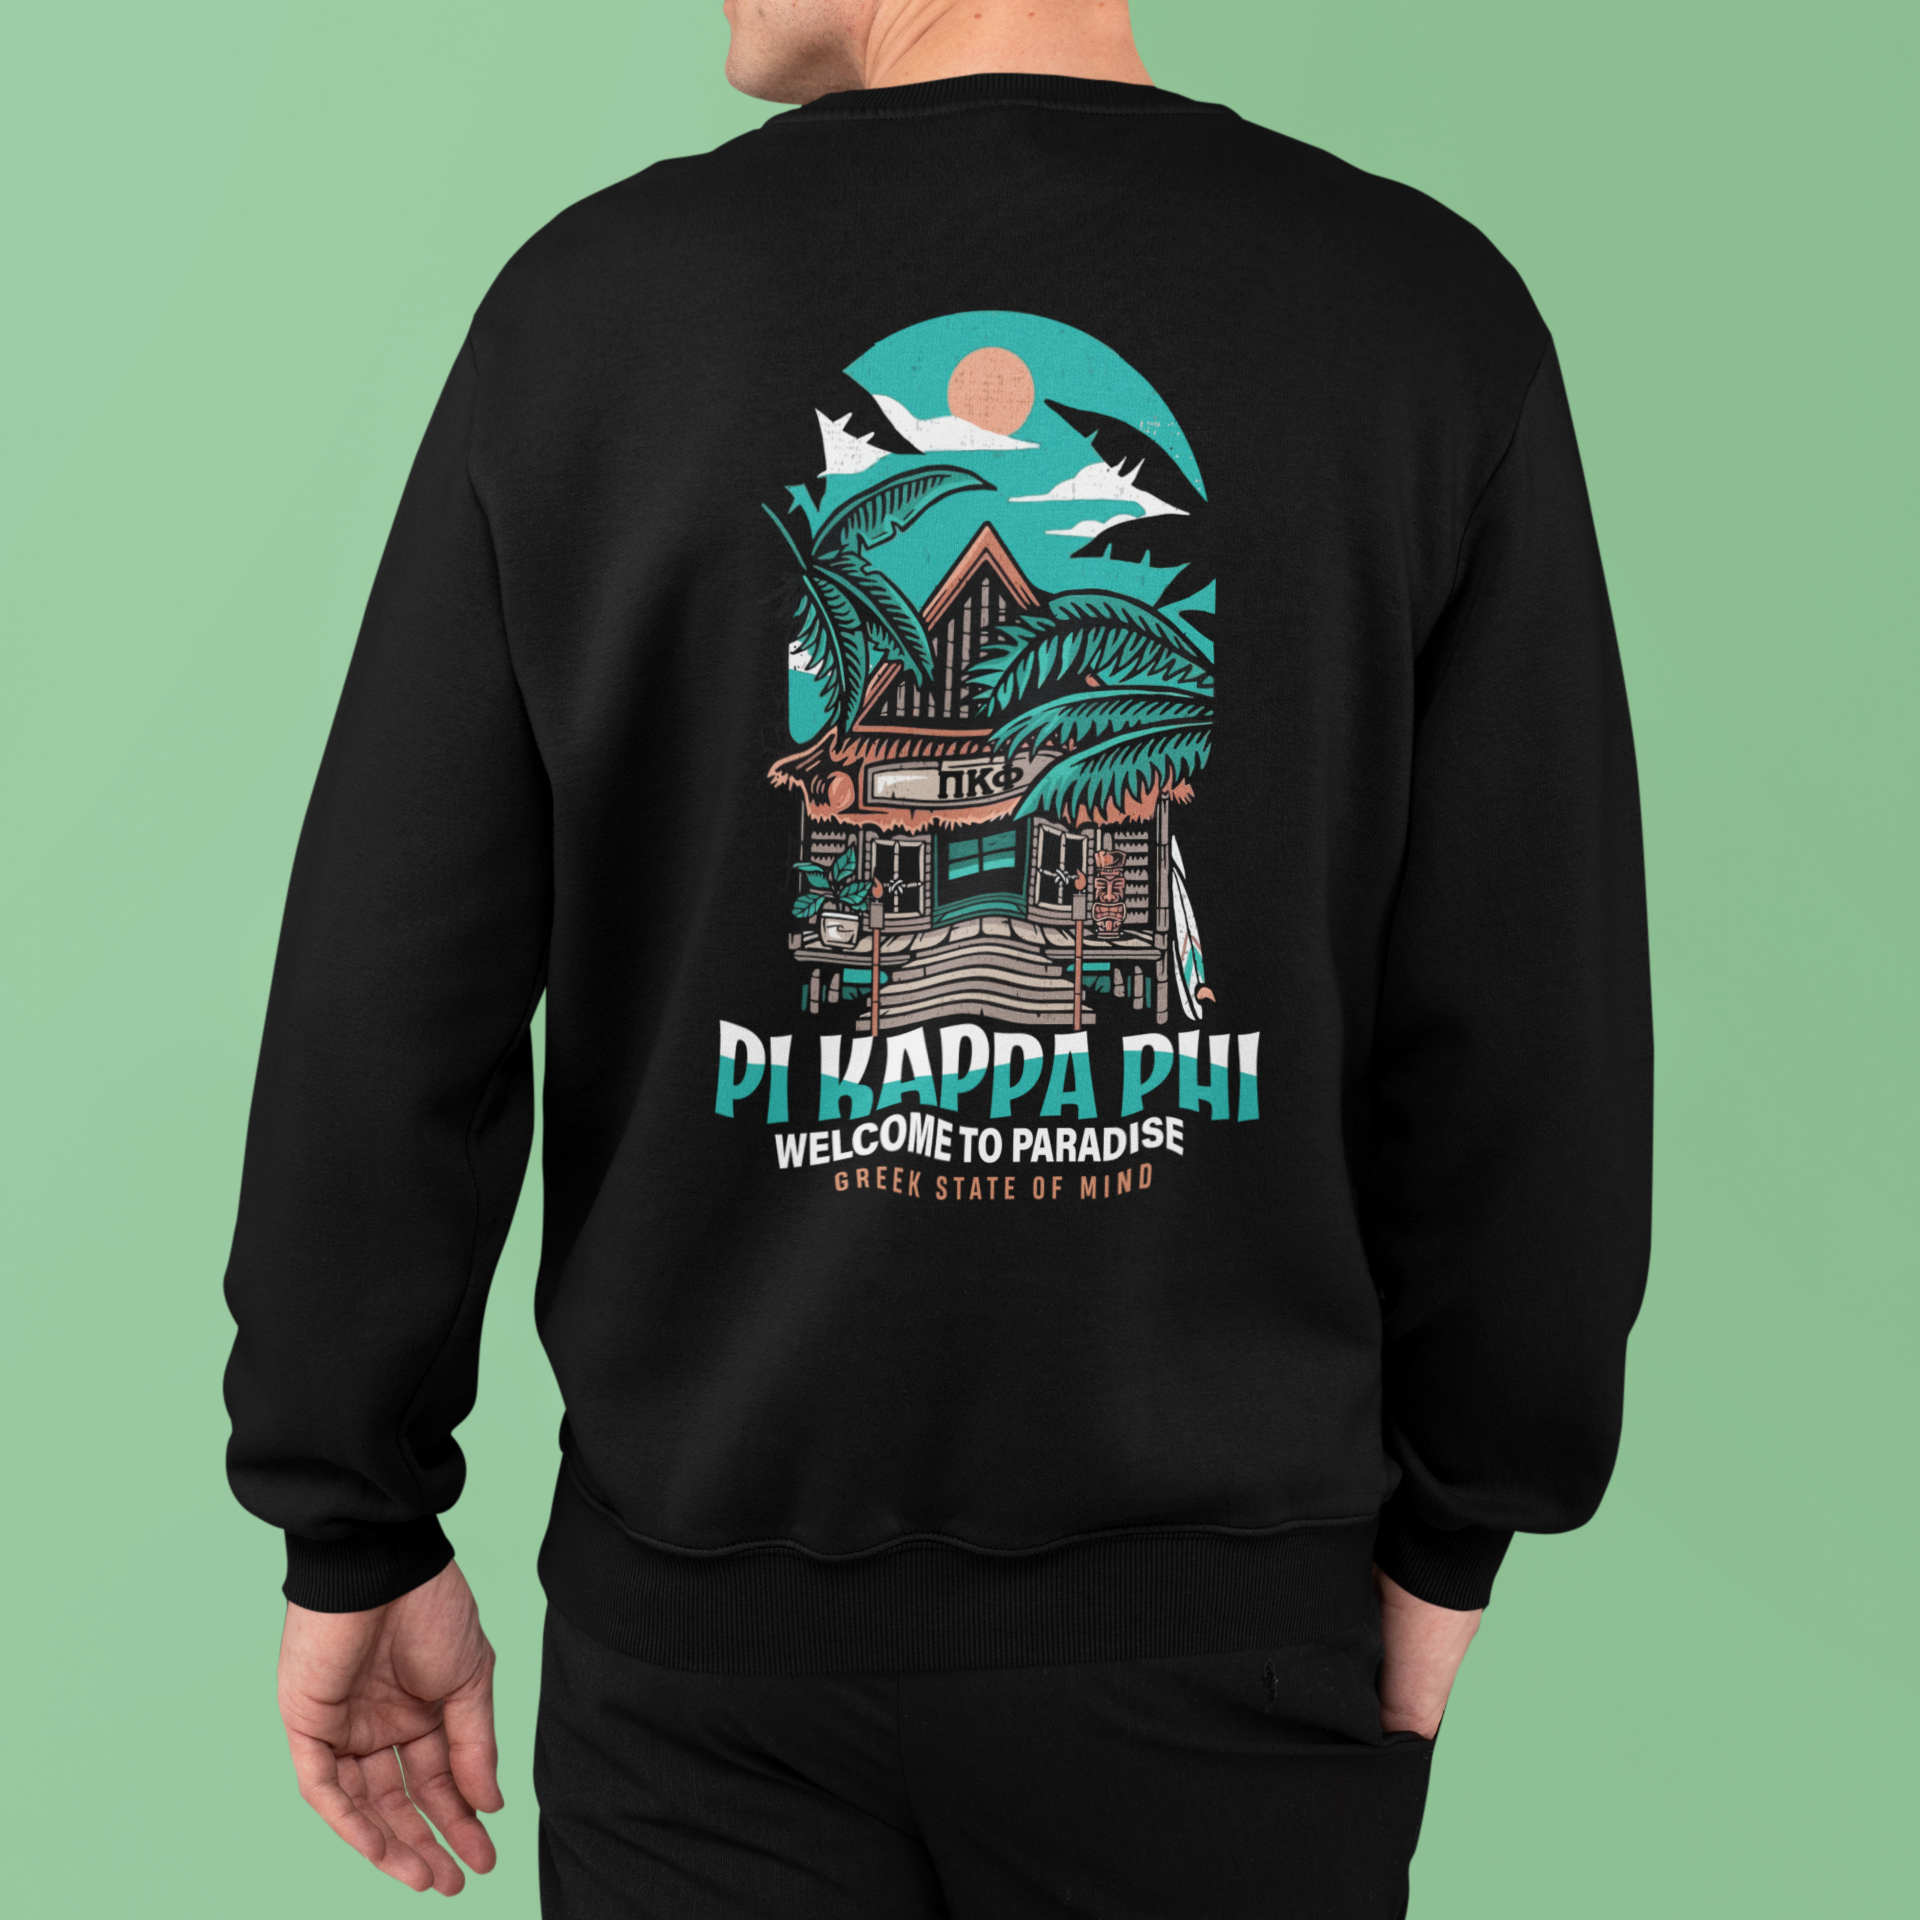 Black Pi Kappa Phi Graphic Crewneck Sweatshirt | Welcome to Paradise | Pi Kappa Phi Apparel and Merchandise model 